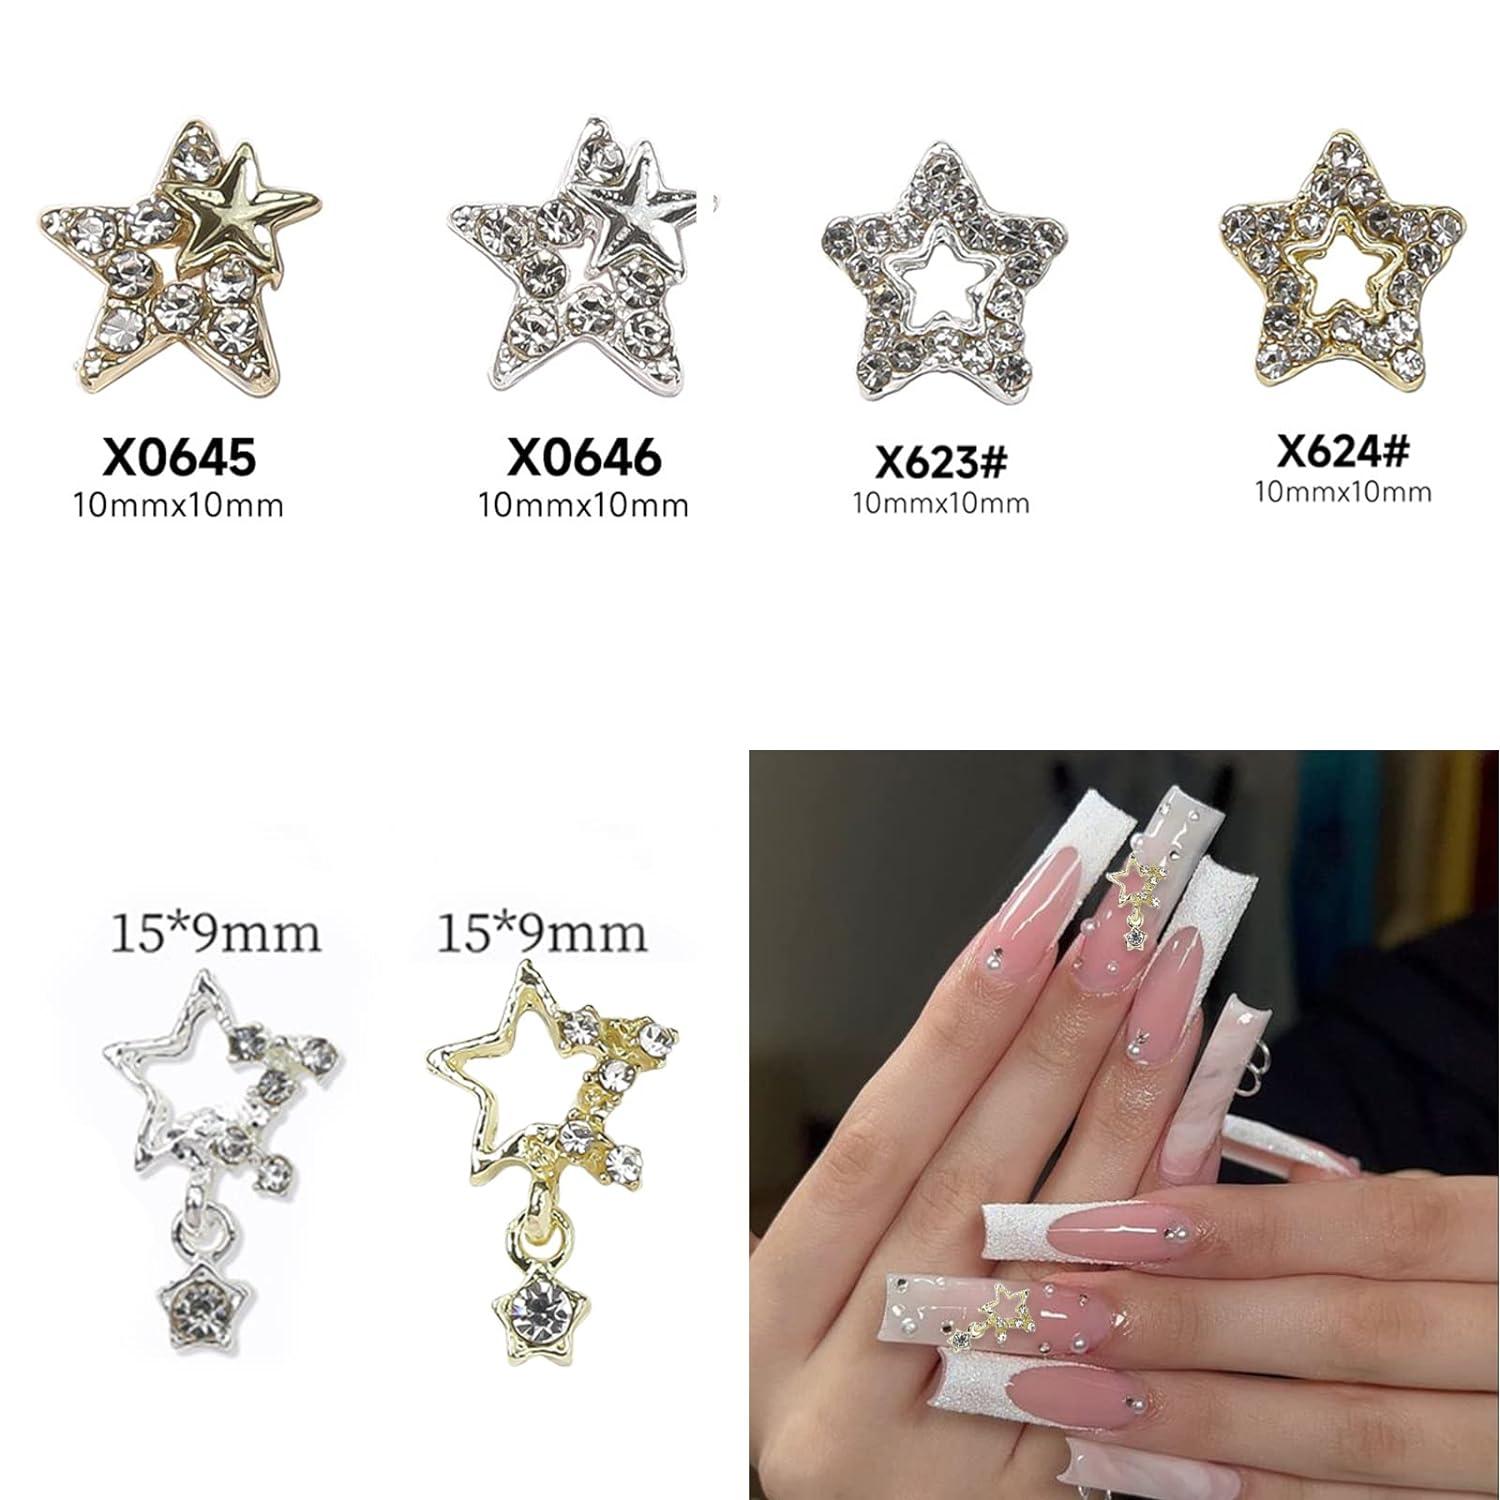 YOSOMMK 20PCS 3D Nail Charms Flower Nail Art Charms for Nail Gems